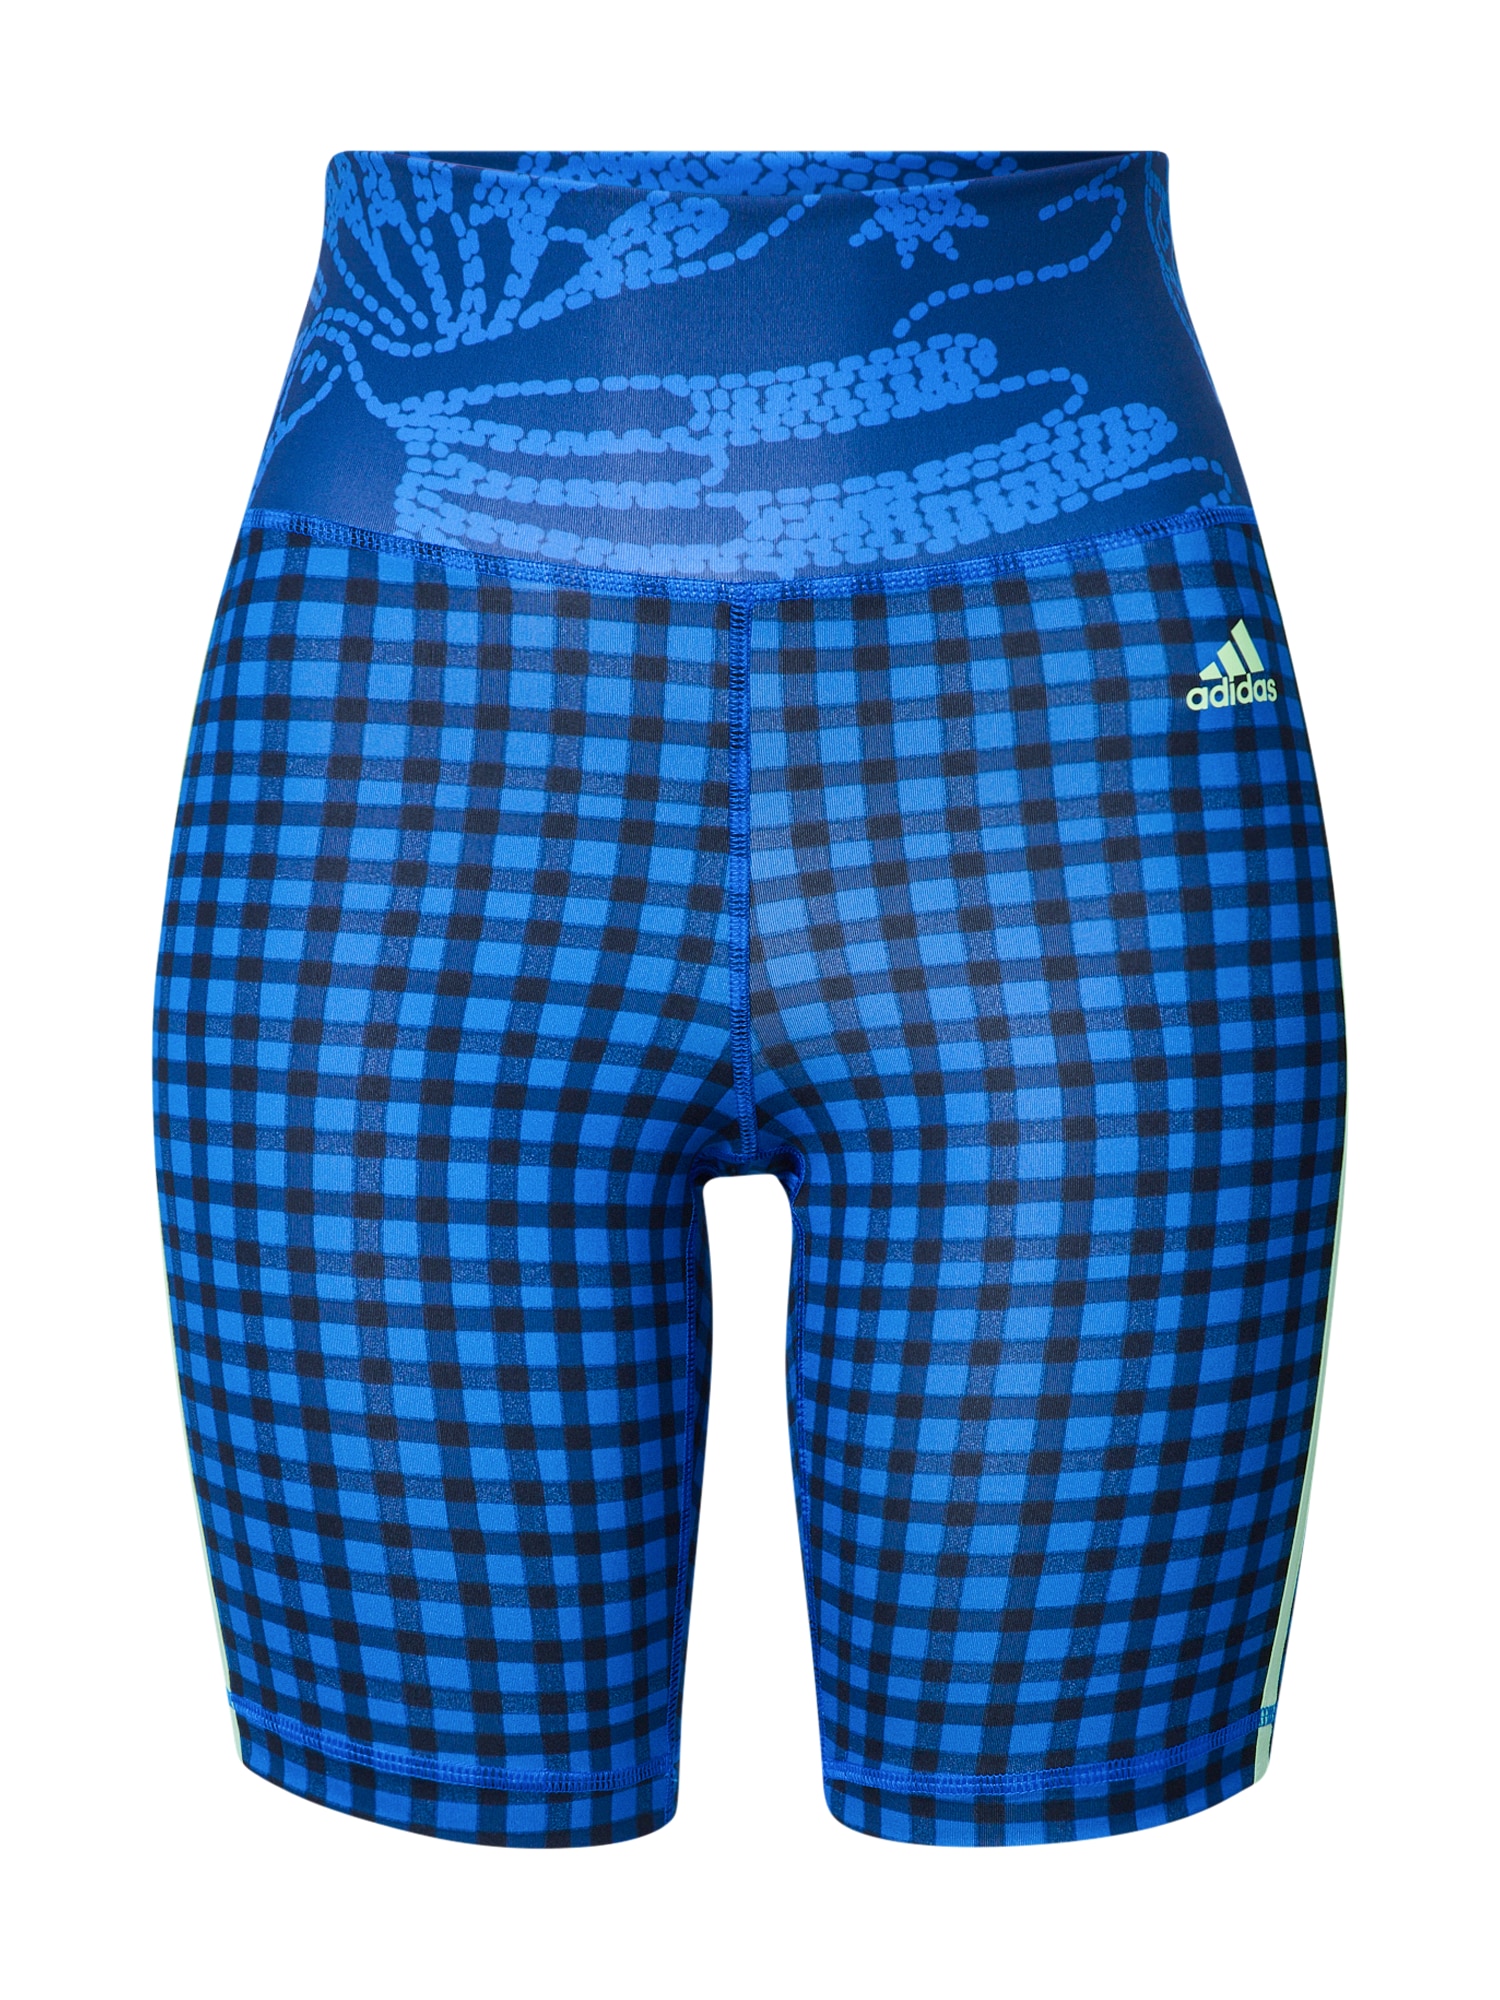 ADIDAS PERFORMANCE Športne hlače 'Farm Rio'  modra / mornarska / trst